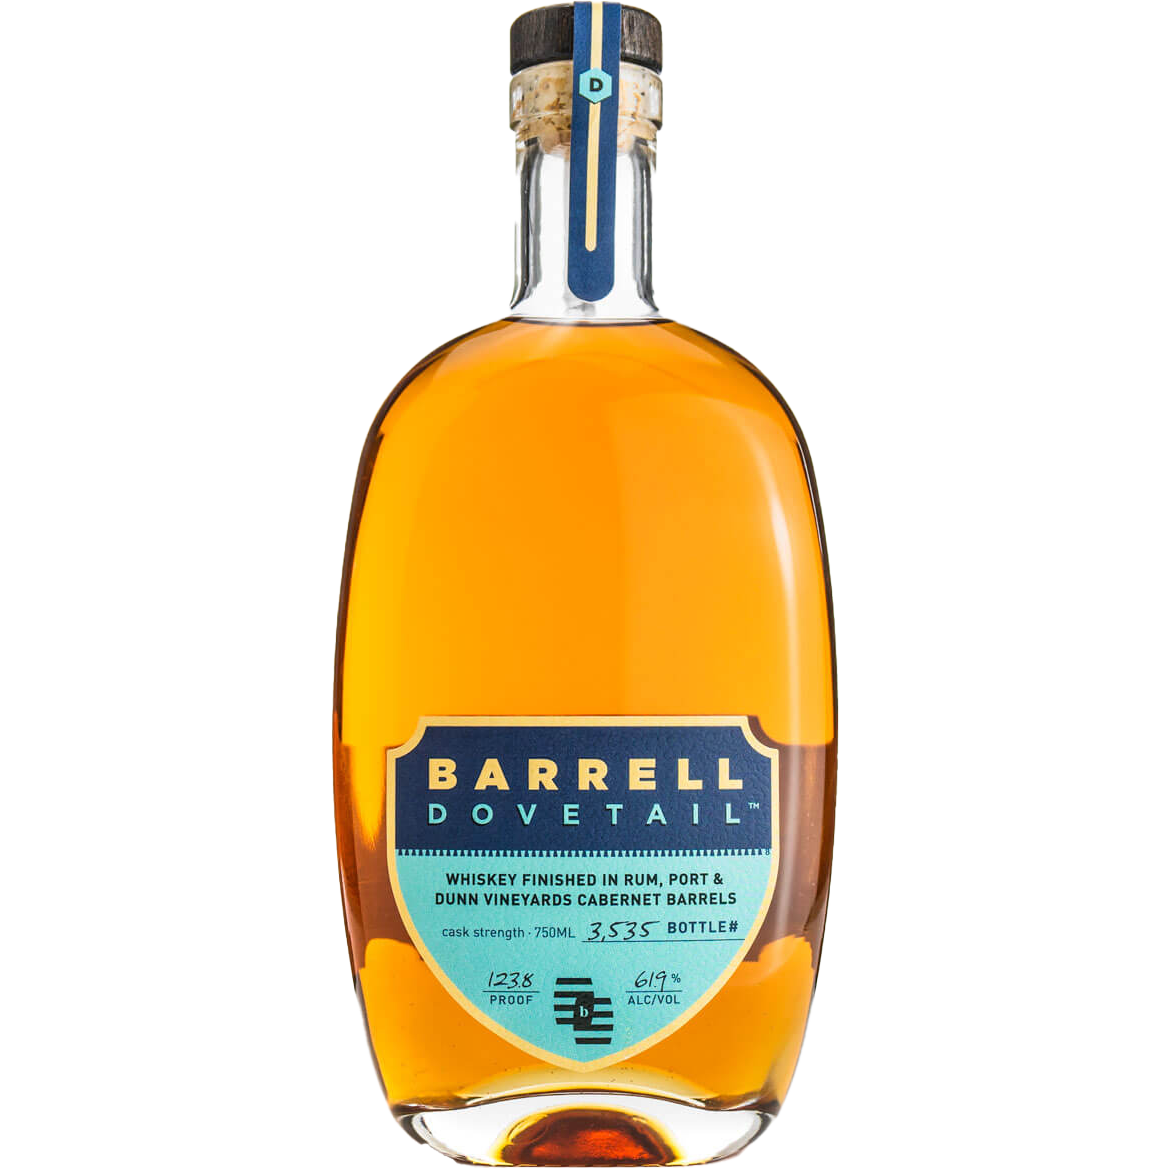 Barrell 'Dovetail' Rum, Port & Cabernet Barrel Finished Whiskey